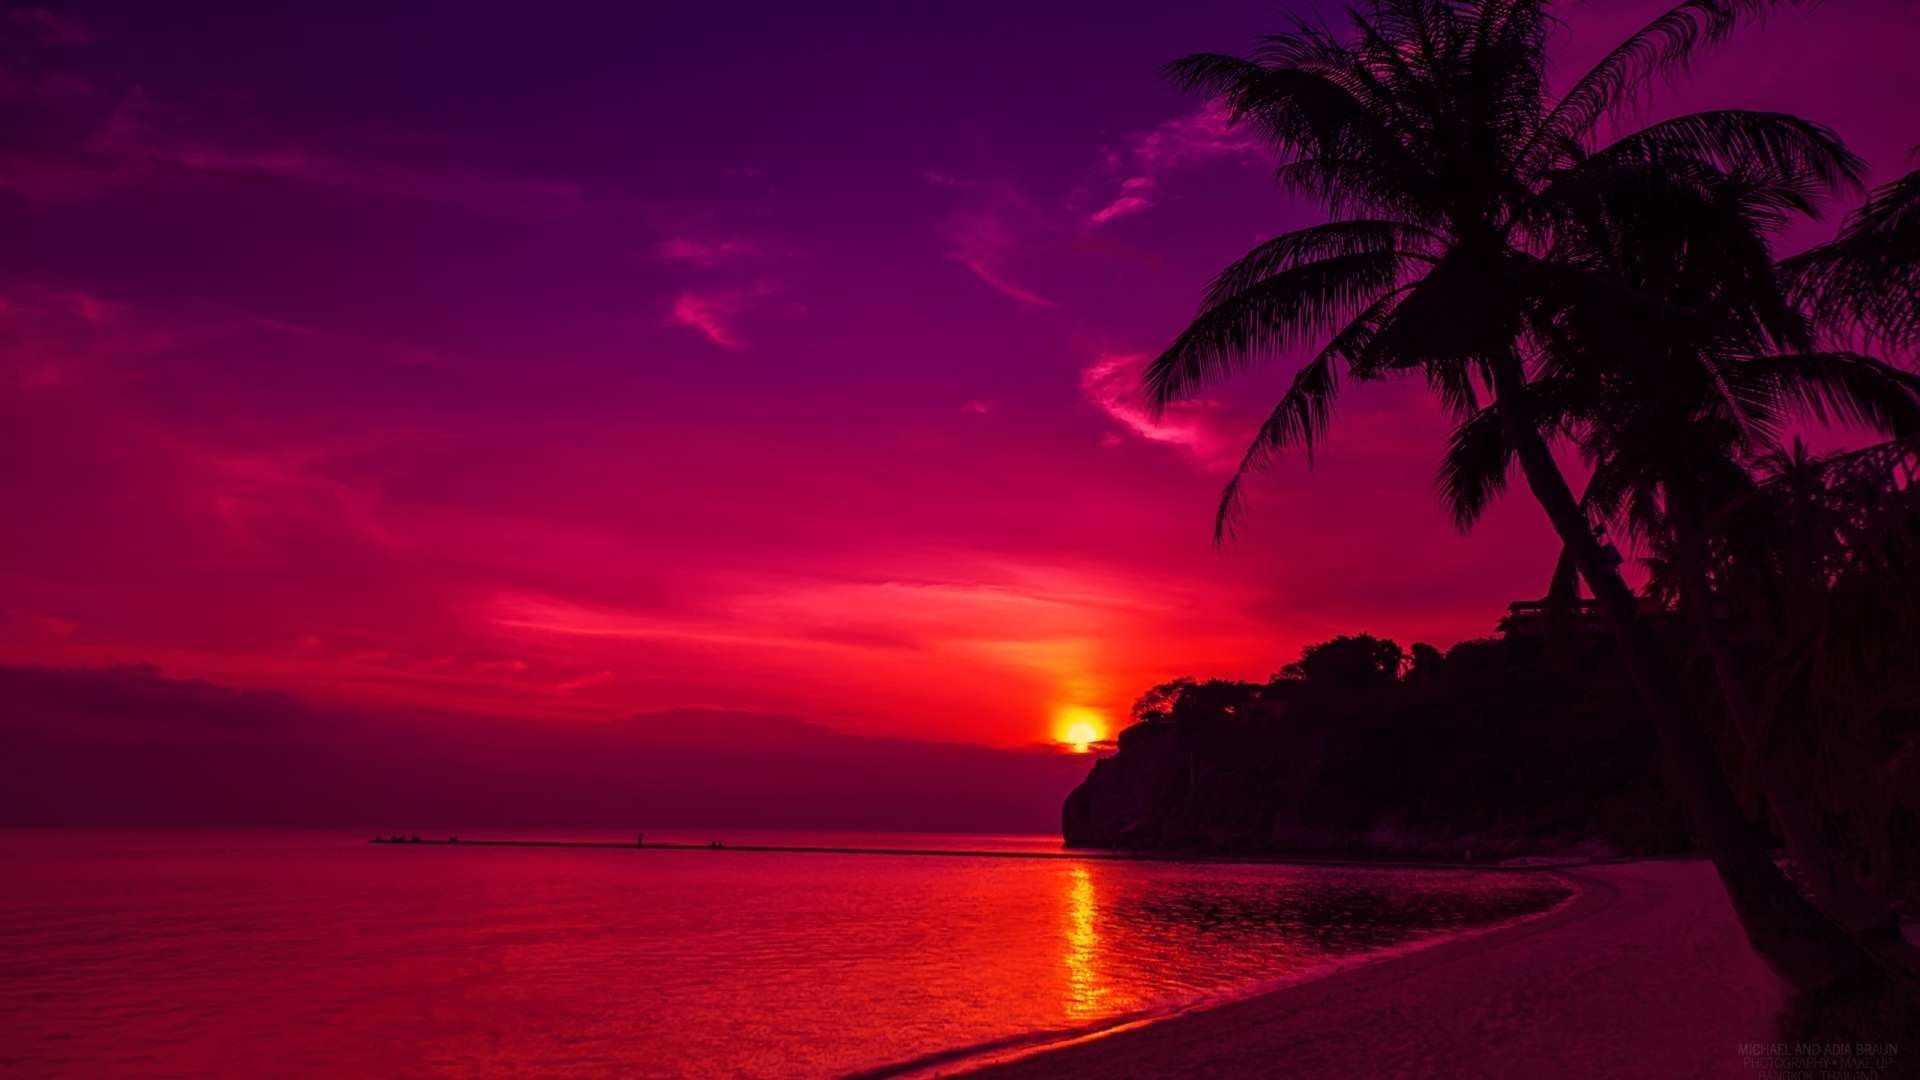 HD Sunset Wallpaper Image